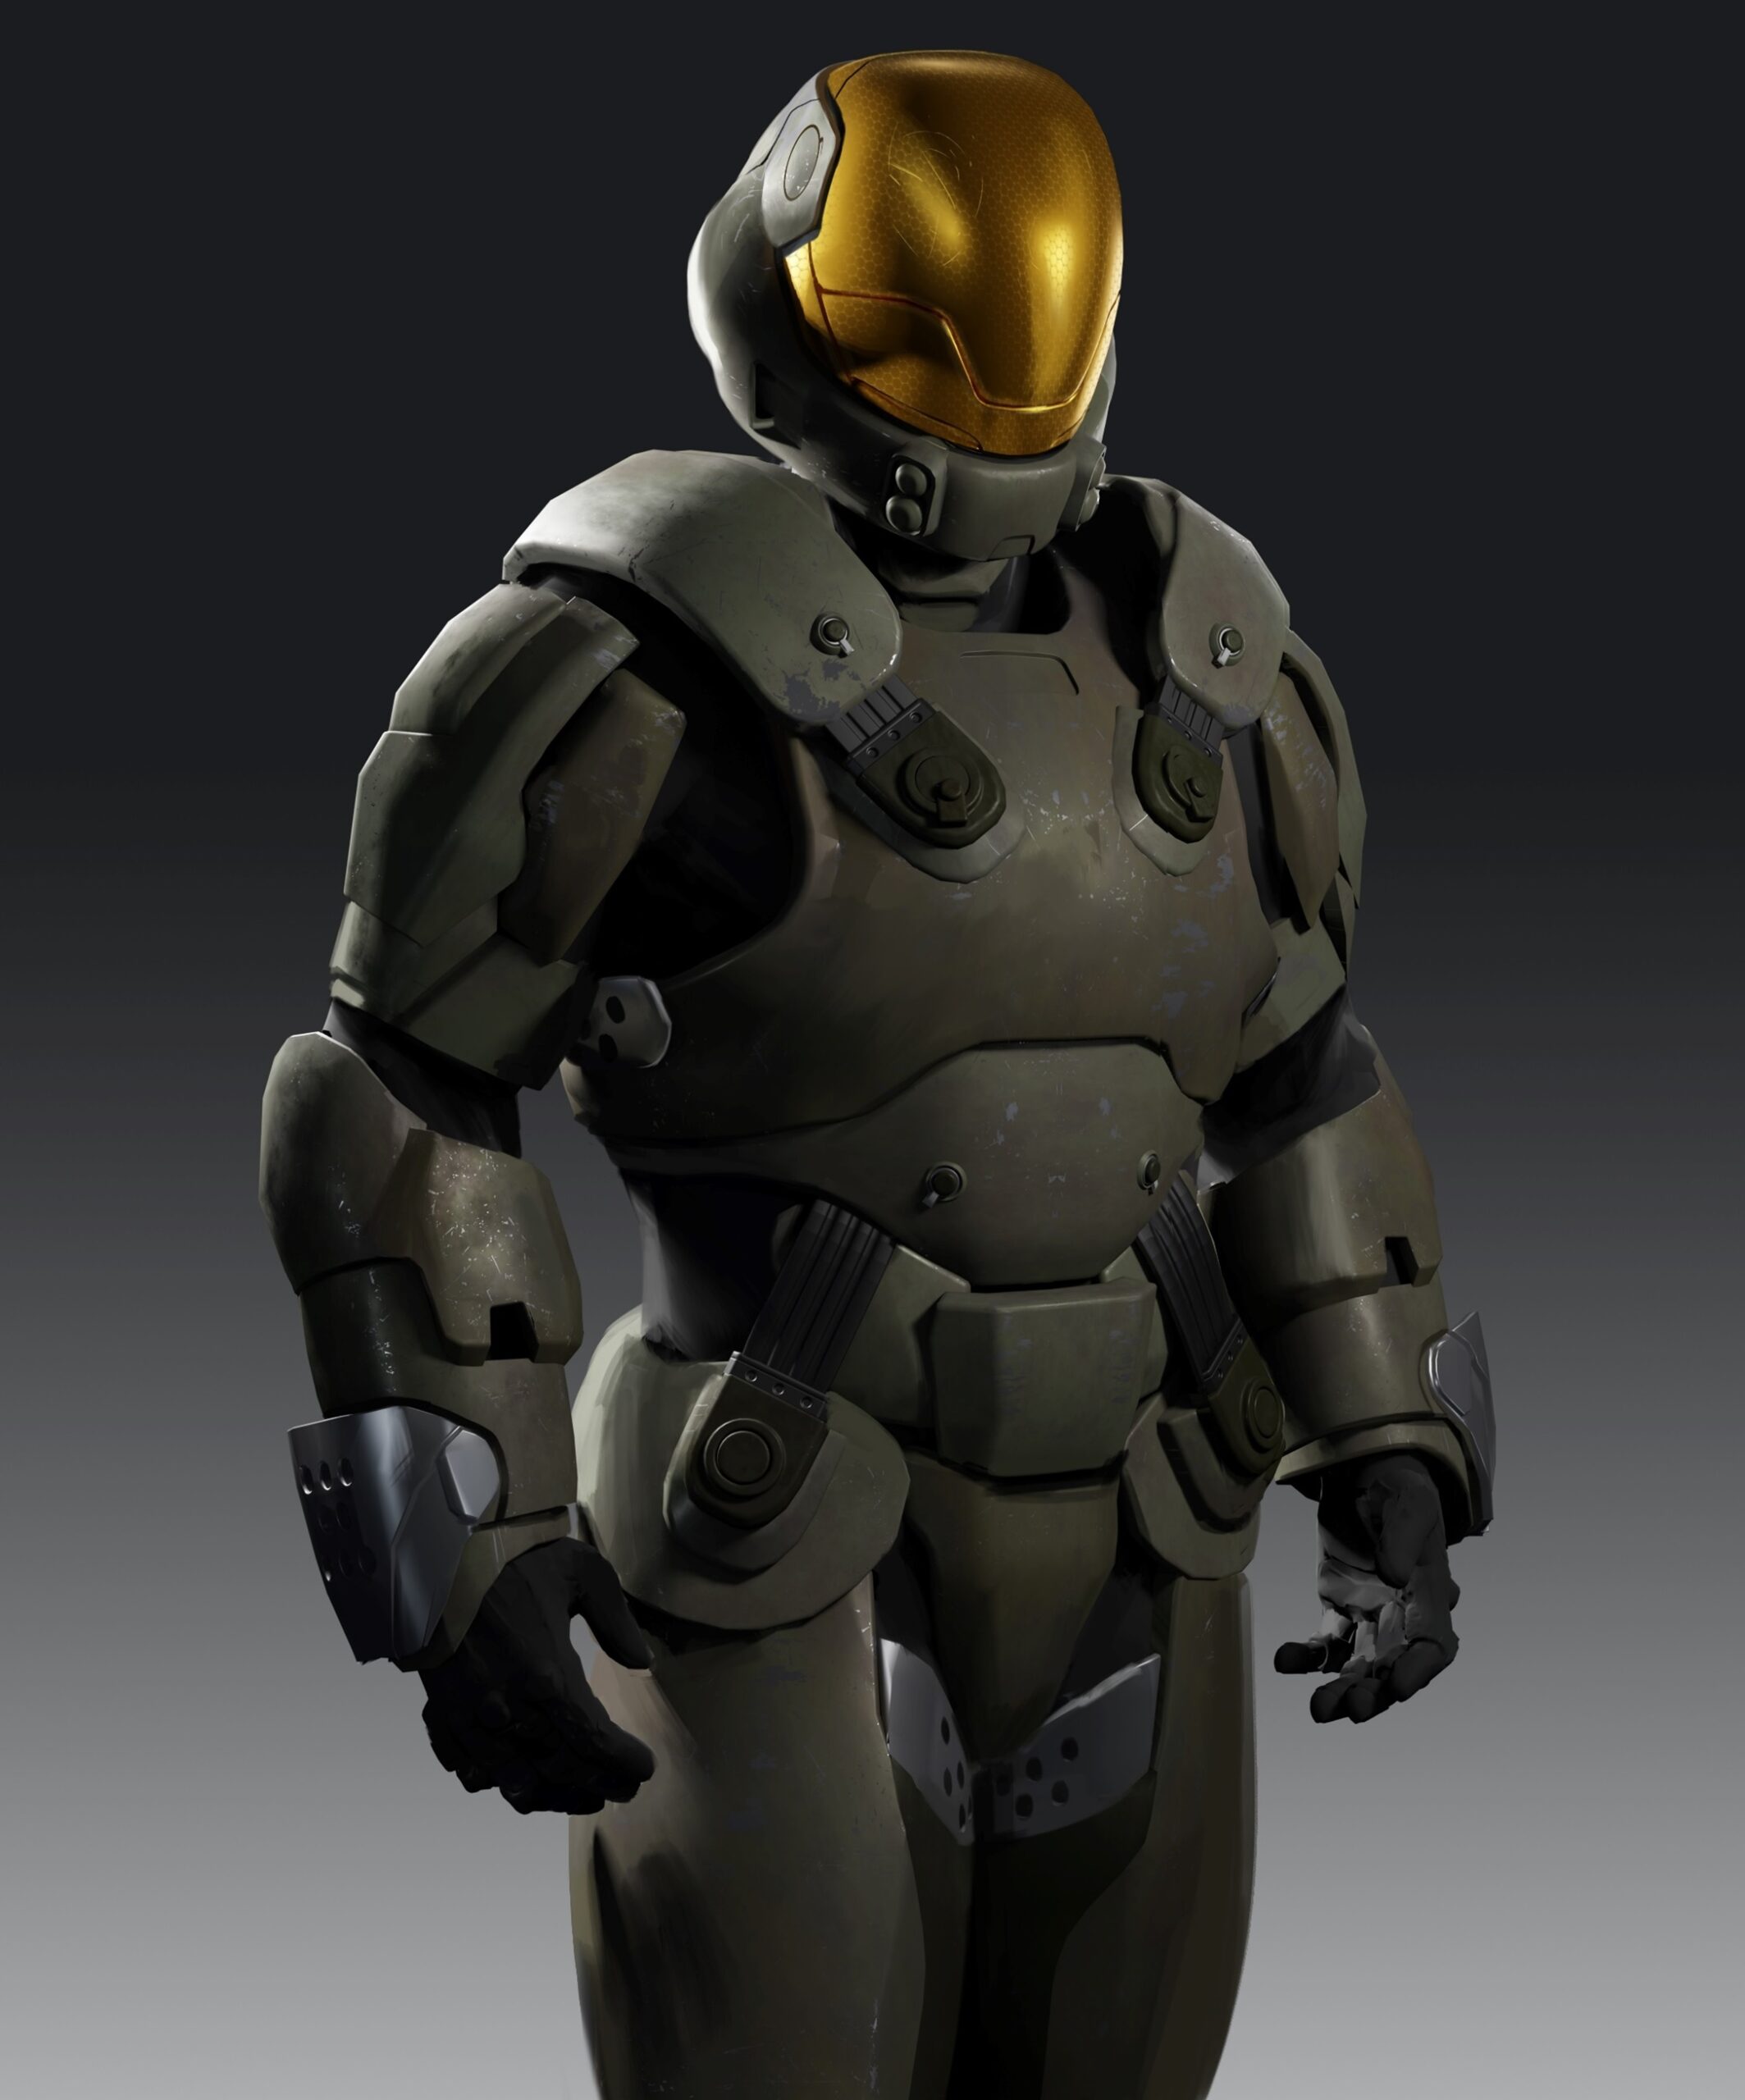 Alternate image of Kurt-051 with SPI helmet